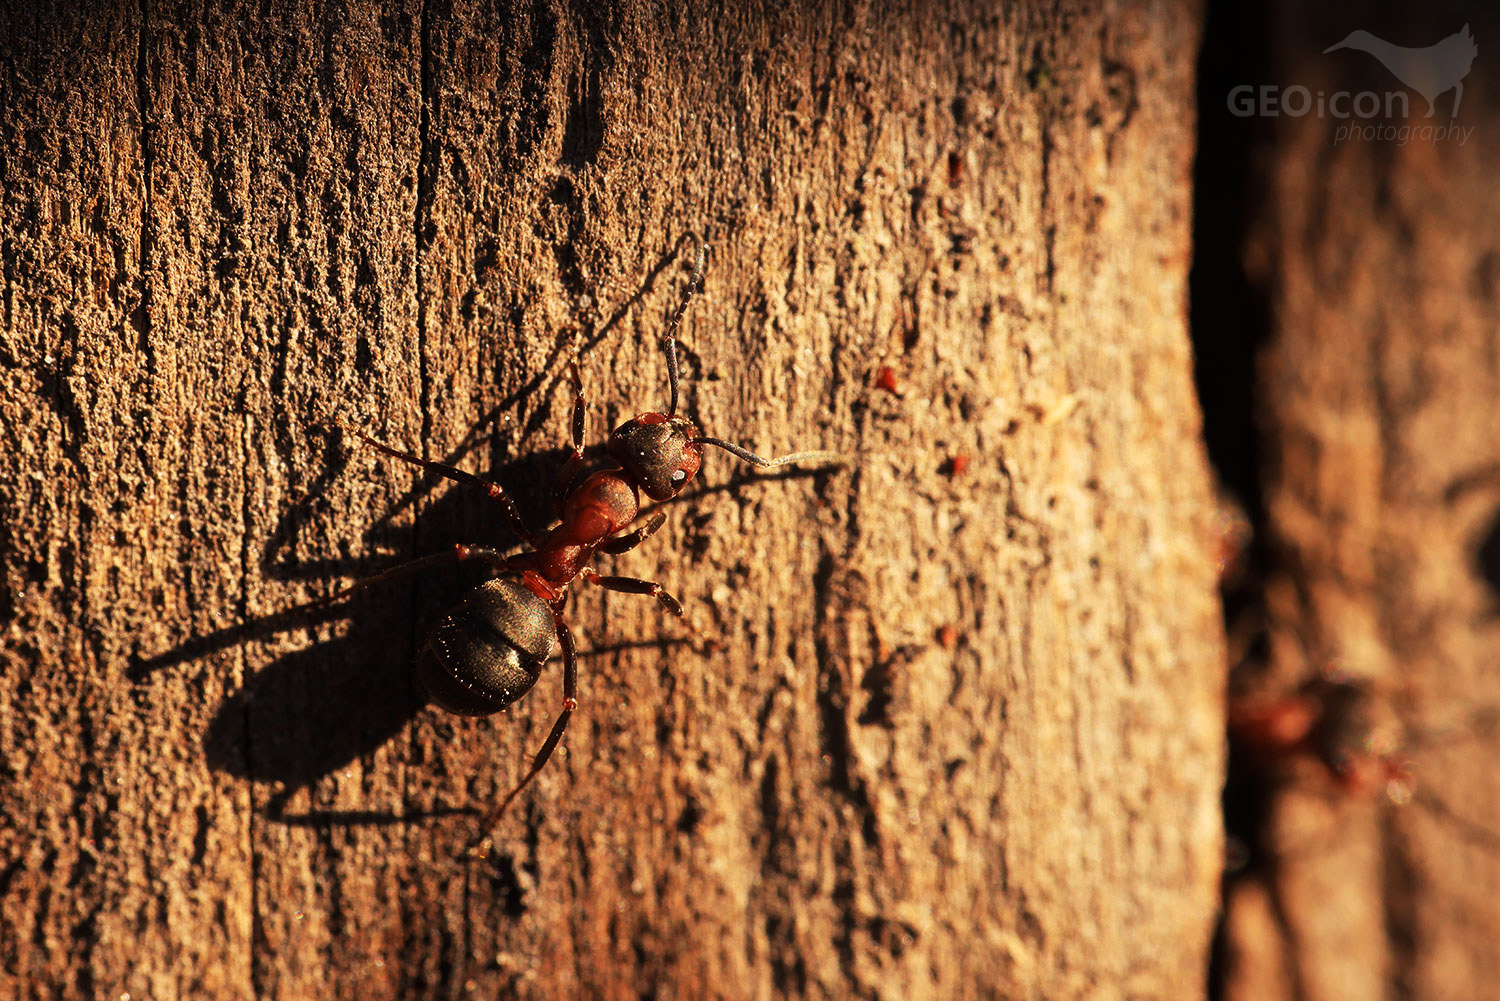 Red wood ant / mravenec lesní (Formica rufa)